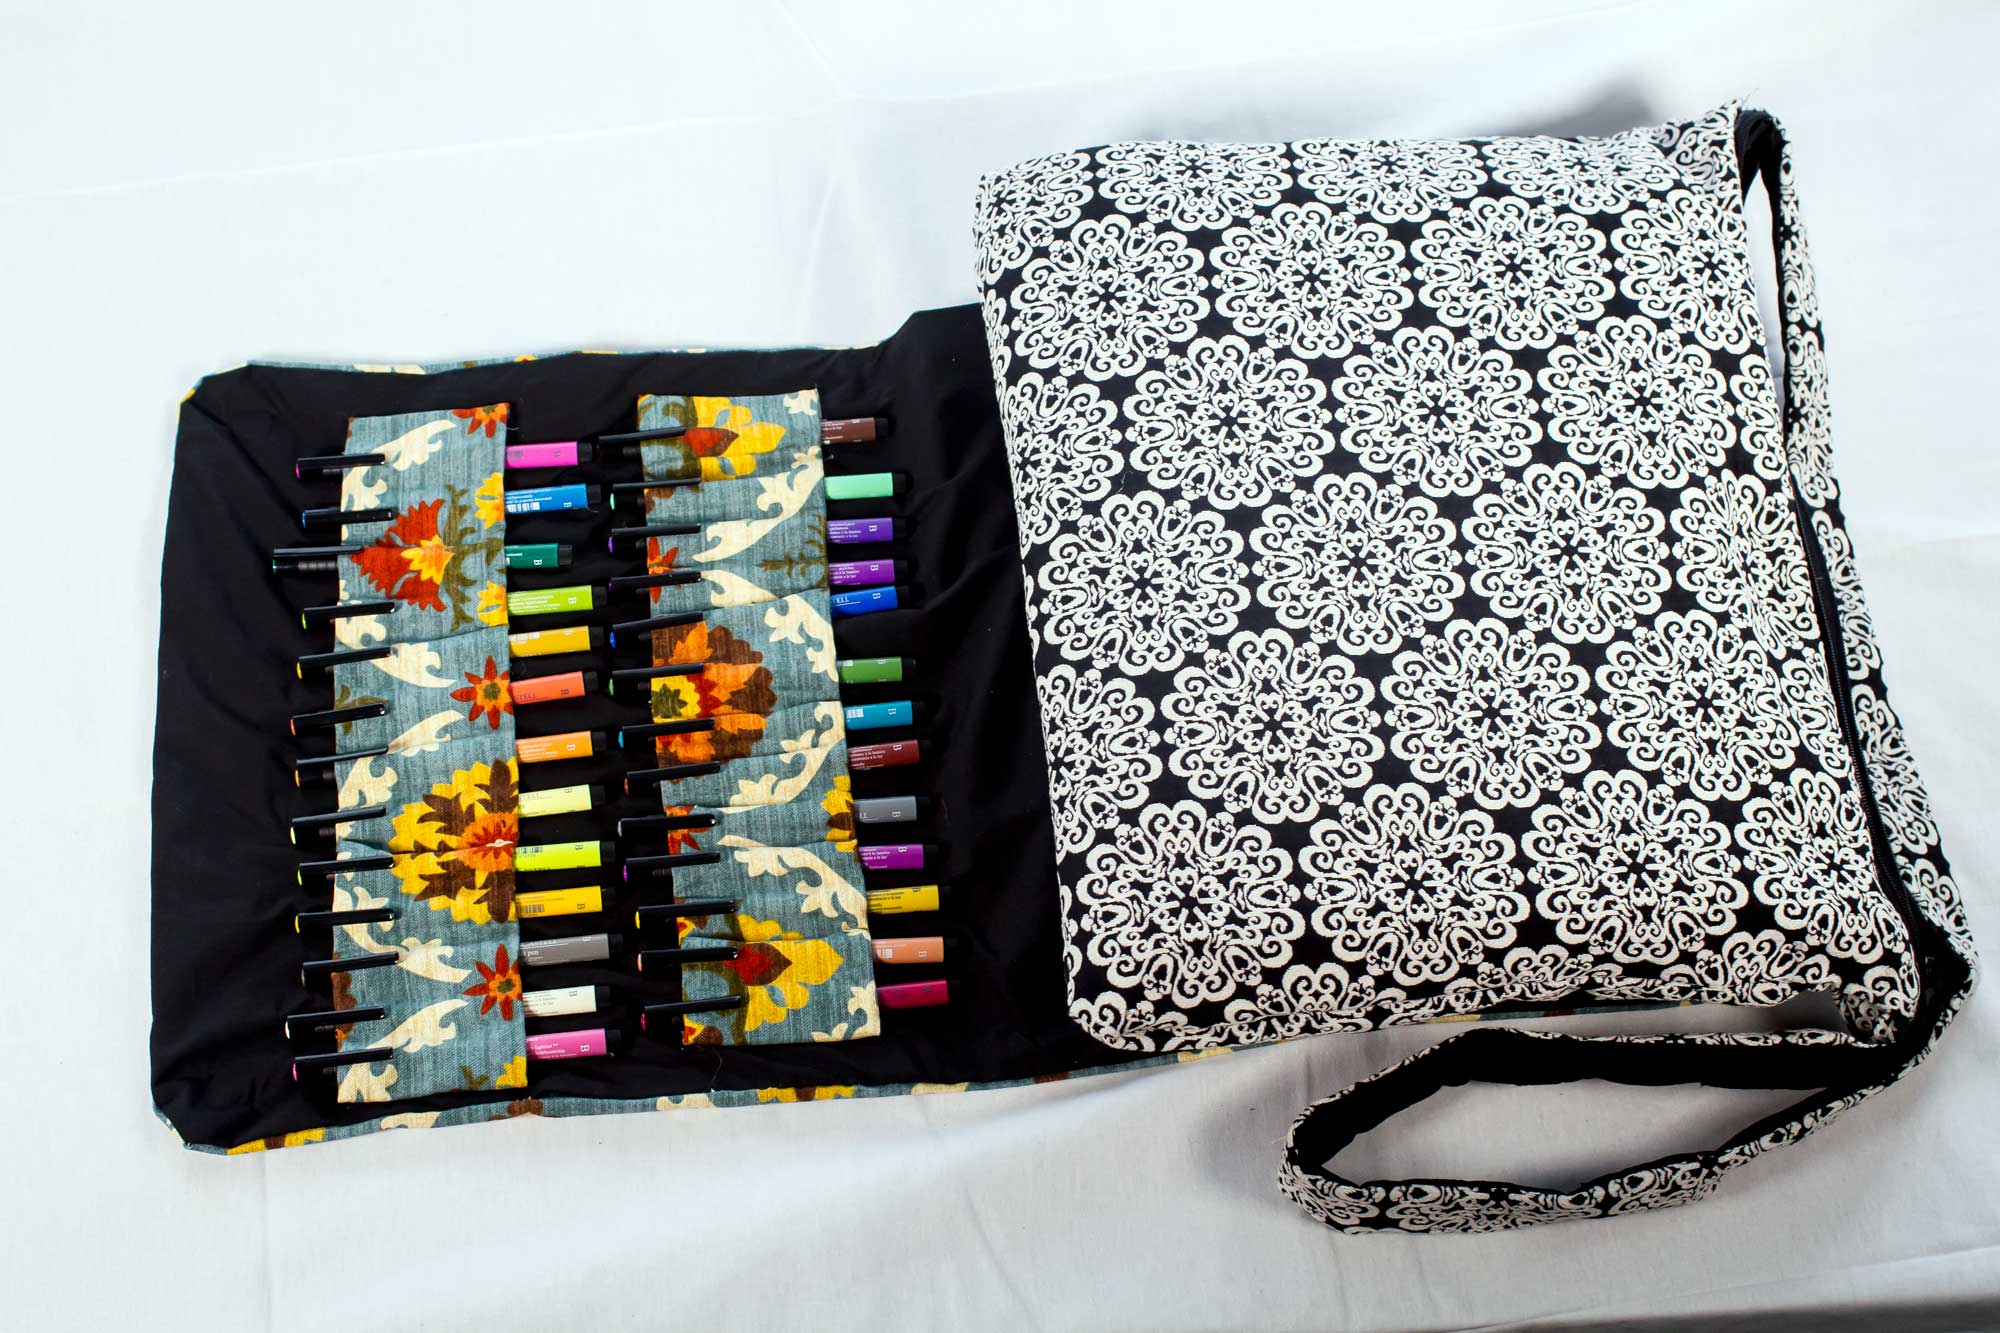 Ariel Cotton Industrial Design Computer Art Supply Bag